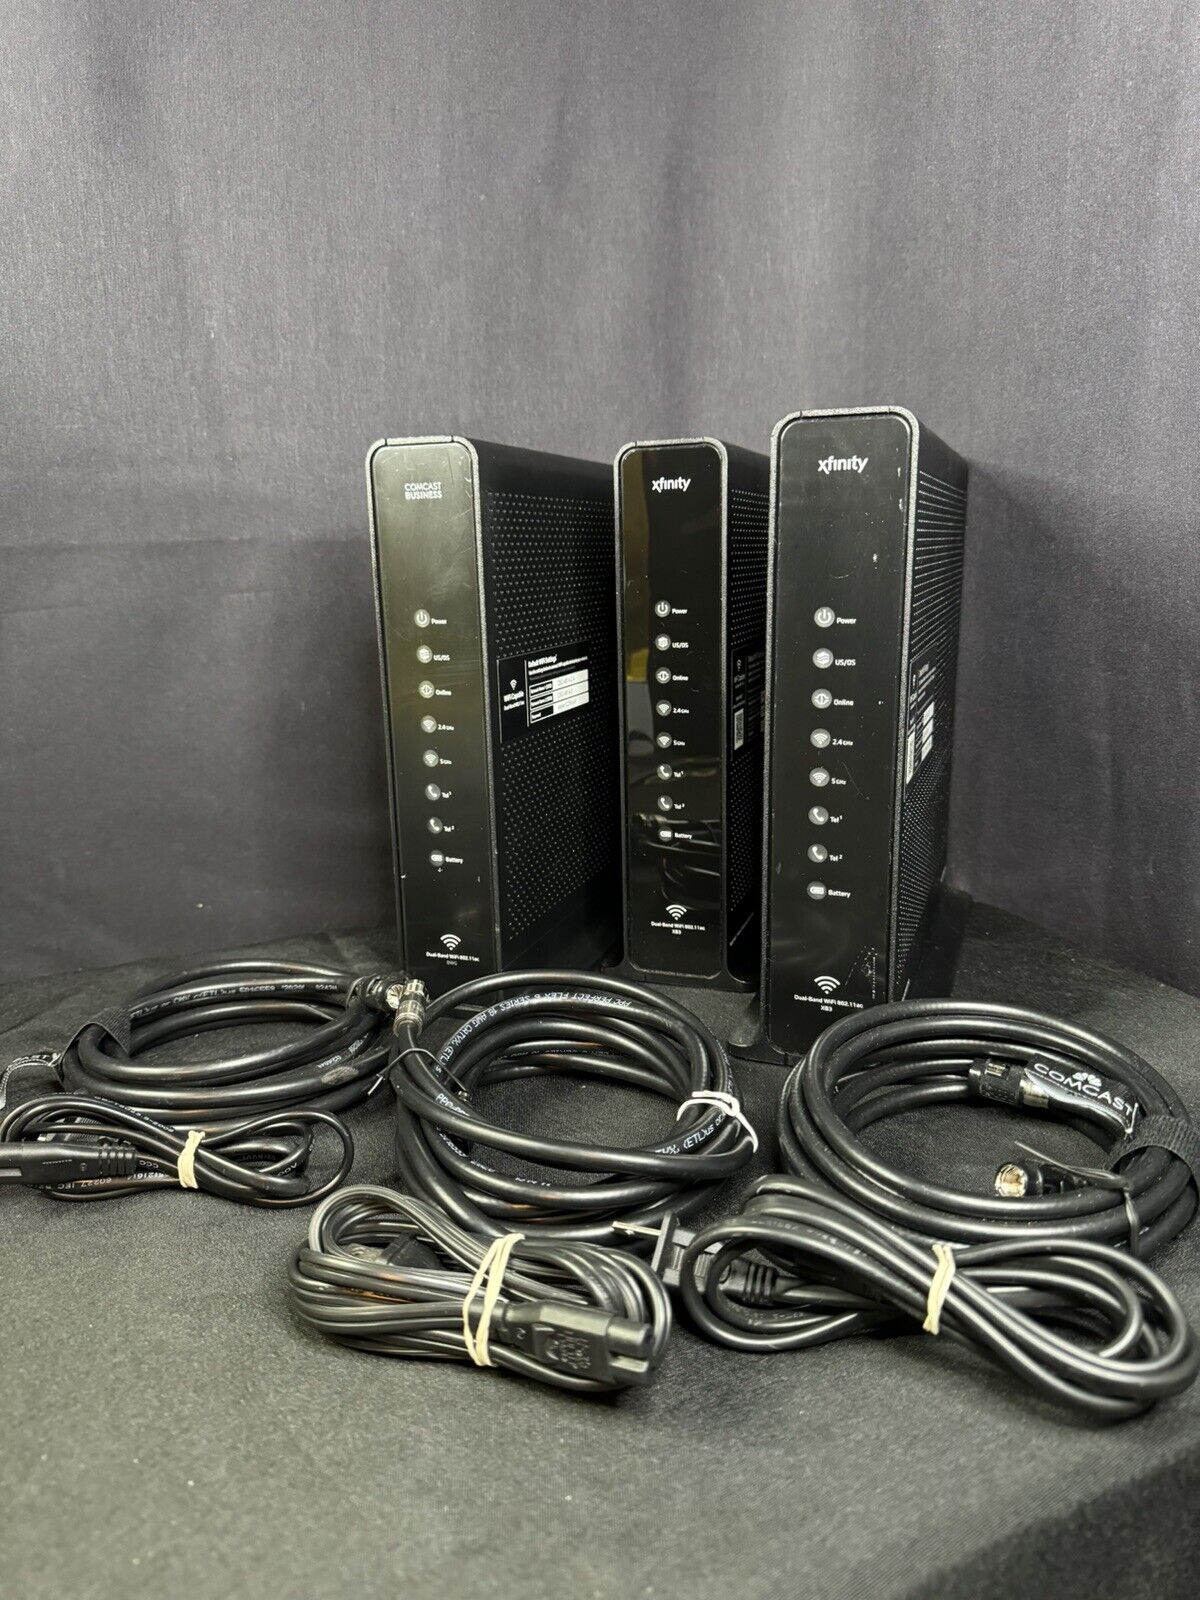 Set Of 3 Xfinity Cisco DPC3941T XB3 Wireless Modem Router DOCSIS 3.0 Gateway